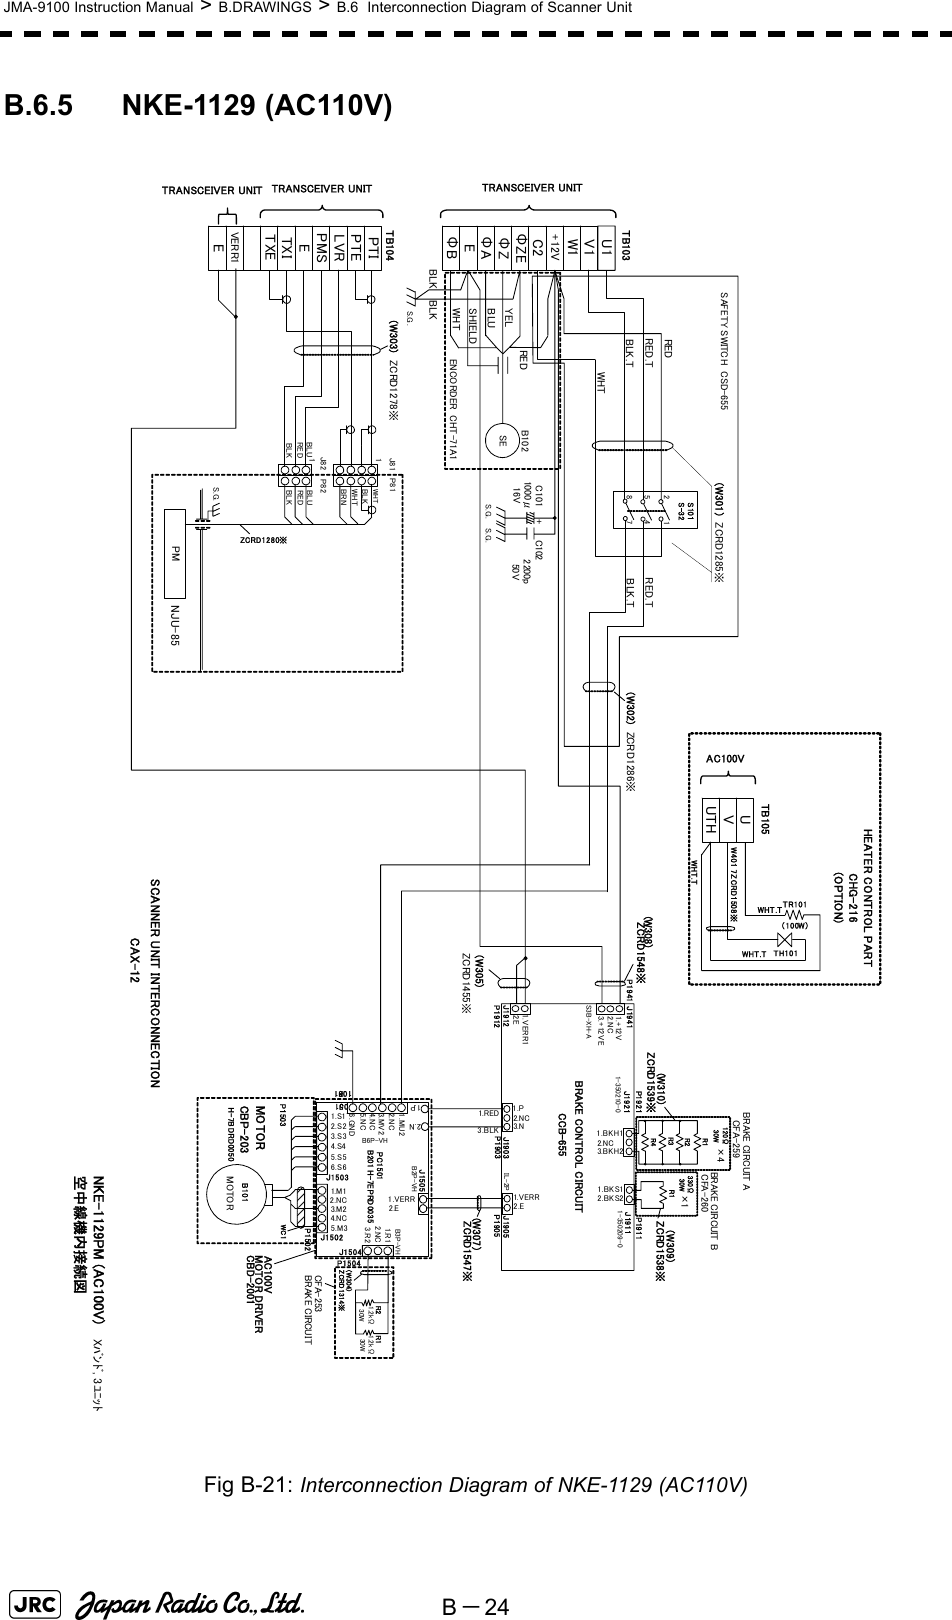 B－24JMA-9100 Instruction Manual &gt; B.DRAWINGS &gt; B.6  Interconnection Diagram of Scanner UnitB.6.5 NKE-1129 (AC110V)Fig B-21: Interconnection Diagram of NKE-1129 (AC110V) NKE-1129PM (AC100V)空中線機内接続図SCANNER UNIT INTERCONNECTIONCAX-12J82J81 P81P82WHTBLKBLUREDBLKWHTBRNU1V1W1+12VC2ΦZEΦZΦAEΦBREDSHIELDYELBLUWHTSEB102BLKBLKENCORDER CHT-71A1C102C1012200p50V1000μ16V+S101S-32217548RED.TBLK.TREDPTIPTELVRPMSETXITXEVERR1EWHTRED.TBLK.TTRANSCEIVER UNITTRANSCEIVER UNIT11BLUREDBLKPMNJU-85ZCRD1280※TB103TB104（W301) ZCRD1285※（W303) ZCRD1278※SAFETY SWITCH CSD-655（W302) ZCRD1286※S.G.S.G.S.G .S.G.Xﾊﾞﾝﾄﾞ, 3ﾕﾆｯﾄTRANSCEIVER UNIT（W305)ZCRD1455※TH101TR101（100W）WHT.THEATER CO NTROL P ARTCHG-216(OPTION)UVUTHAC100VTB105W401 7ZCRD1508※WHT.TWHT.TZCRD1548※1.VERR12.E1.VER R2.E1.P2.NC3.N 1.BKH13.BK H21.BKS12.BKS21.+12V2.NC3.+12VEP1941 J1941J1903P1903J1905P1905J1912P1912BRAKE CONTROL CIRCUITCCB-655J1921P1921J1911P19111.RED3.BLKIL-2PS3B-XH-A1-350210-0 1-350209-0ZCRD1547※(W307 )ZCRD1538※(W309)ZCRD1539※(W310)CBD-2001BRAKE CIRCUITCFA-253J15011.VERR2.EH-7EPRD0035B201J1505PC1501P1501B2P-VH1.P2.NP1502AC100VWC1CBP-203H-7BDRD00502.NC4.NC1.S12.S23.S34.S45.S56.S6J1502J15033.M21.M15.M3P1503MOTORMOTORB101(W308)MOTOR DRIVERBRAKE CIRCUIT BCFA-260BRAKE CIRCUIT ACFA-259R1R2R3R4R1120Ω30W330Ω30W×4×12.NC3.M V 21.MU22.N C4.N C5.N C6.GNDB6P-VH1.2kΩ30W1.2kΩ30W(W304)ZCRD1314※R1R2P15041.R 13.R2J1504B3P-VH2.NC